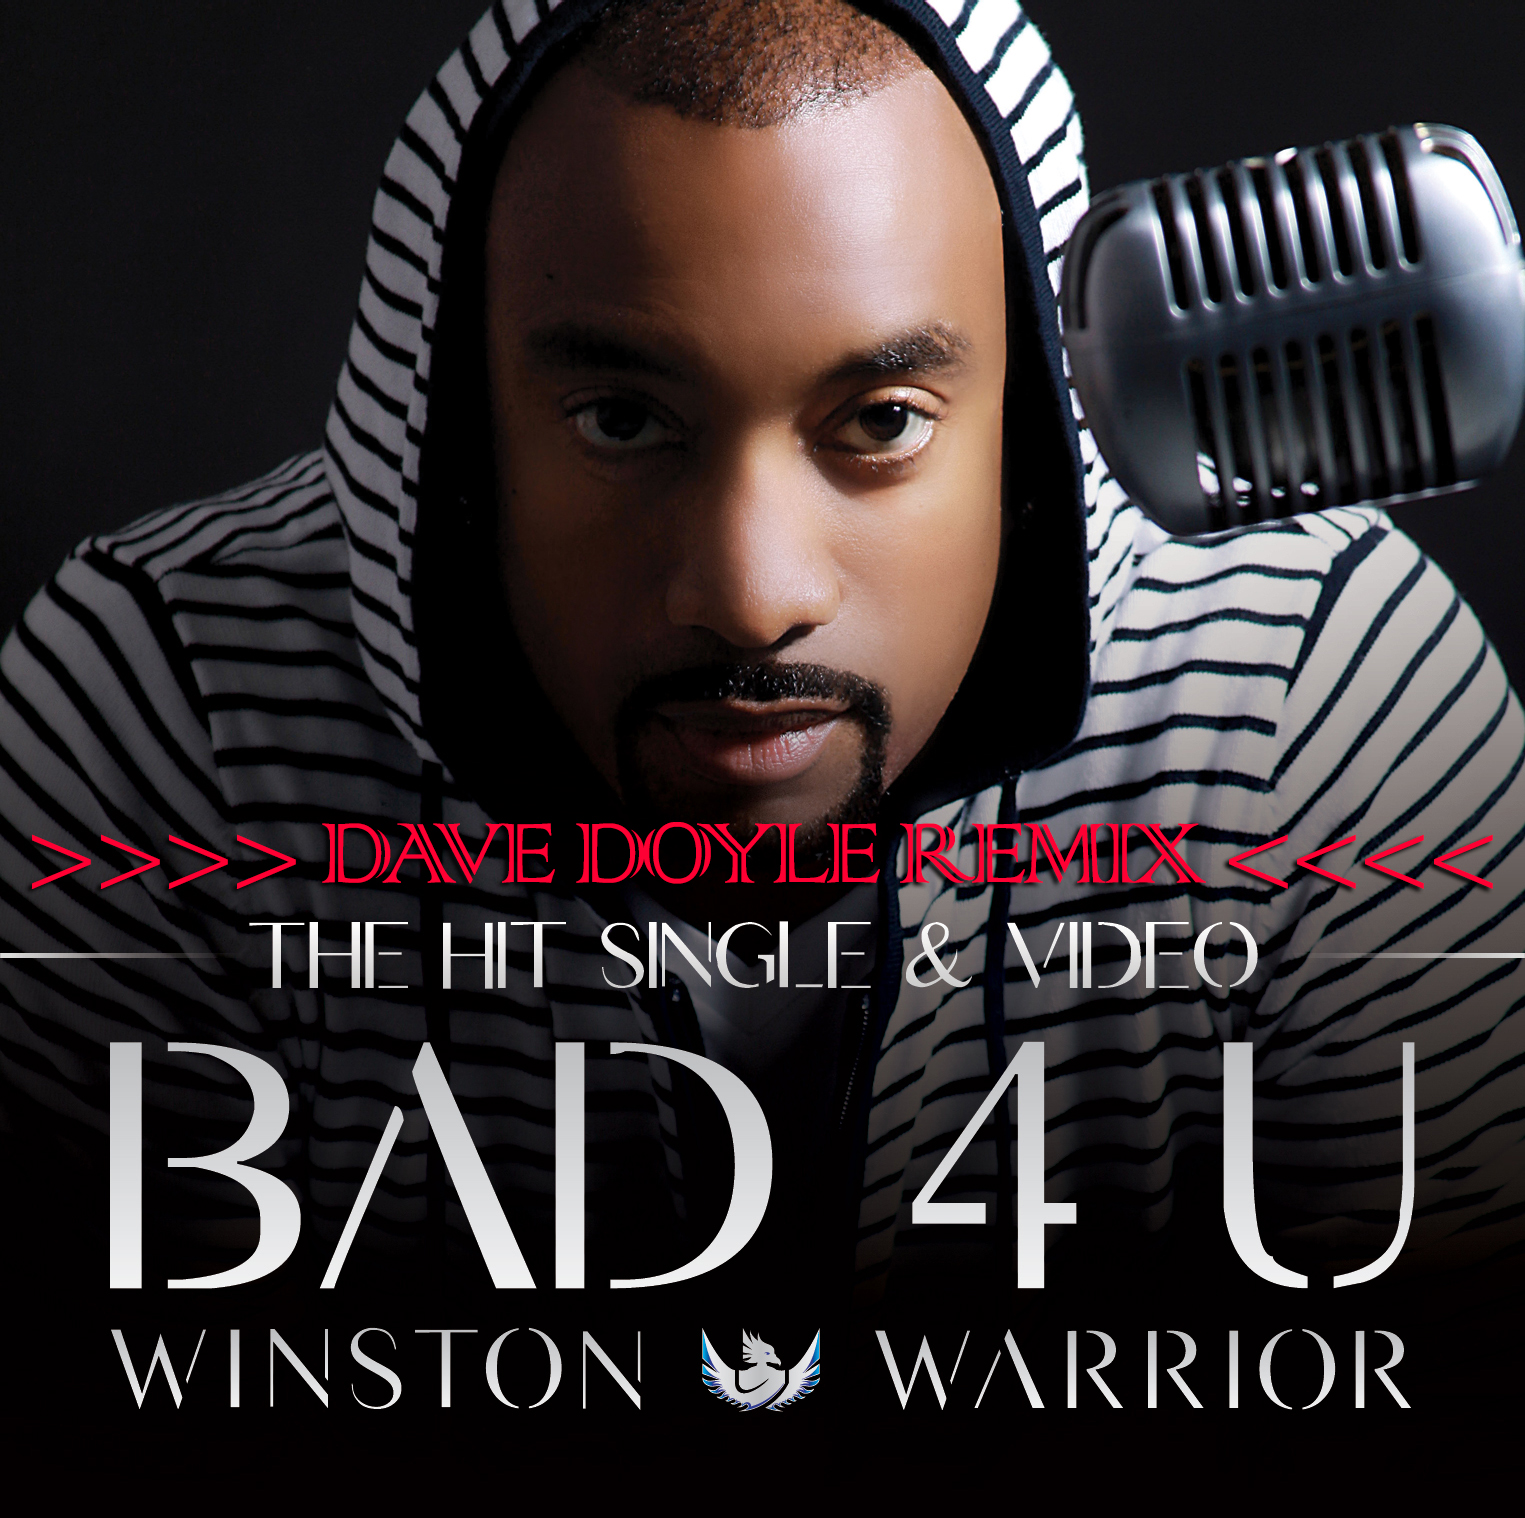 Winston Warrior - Bad 4 U